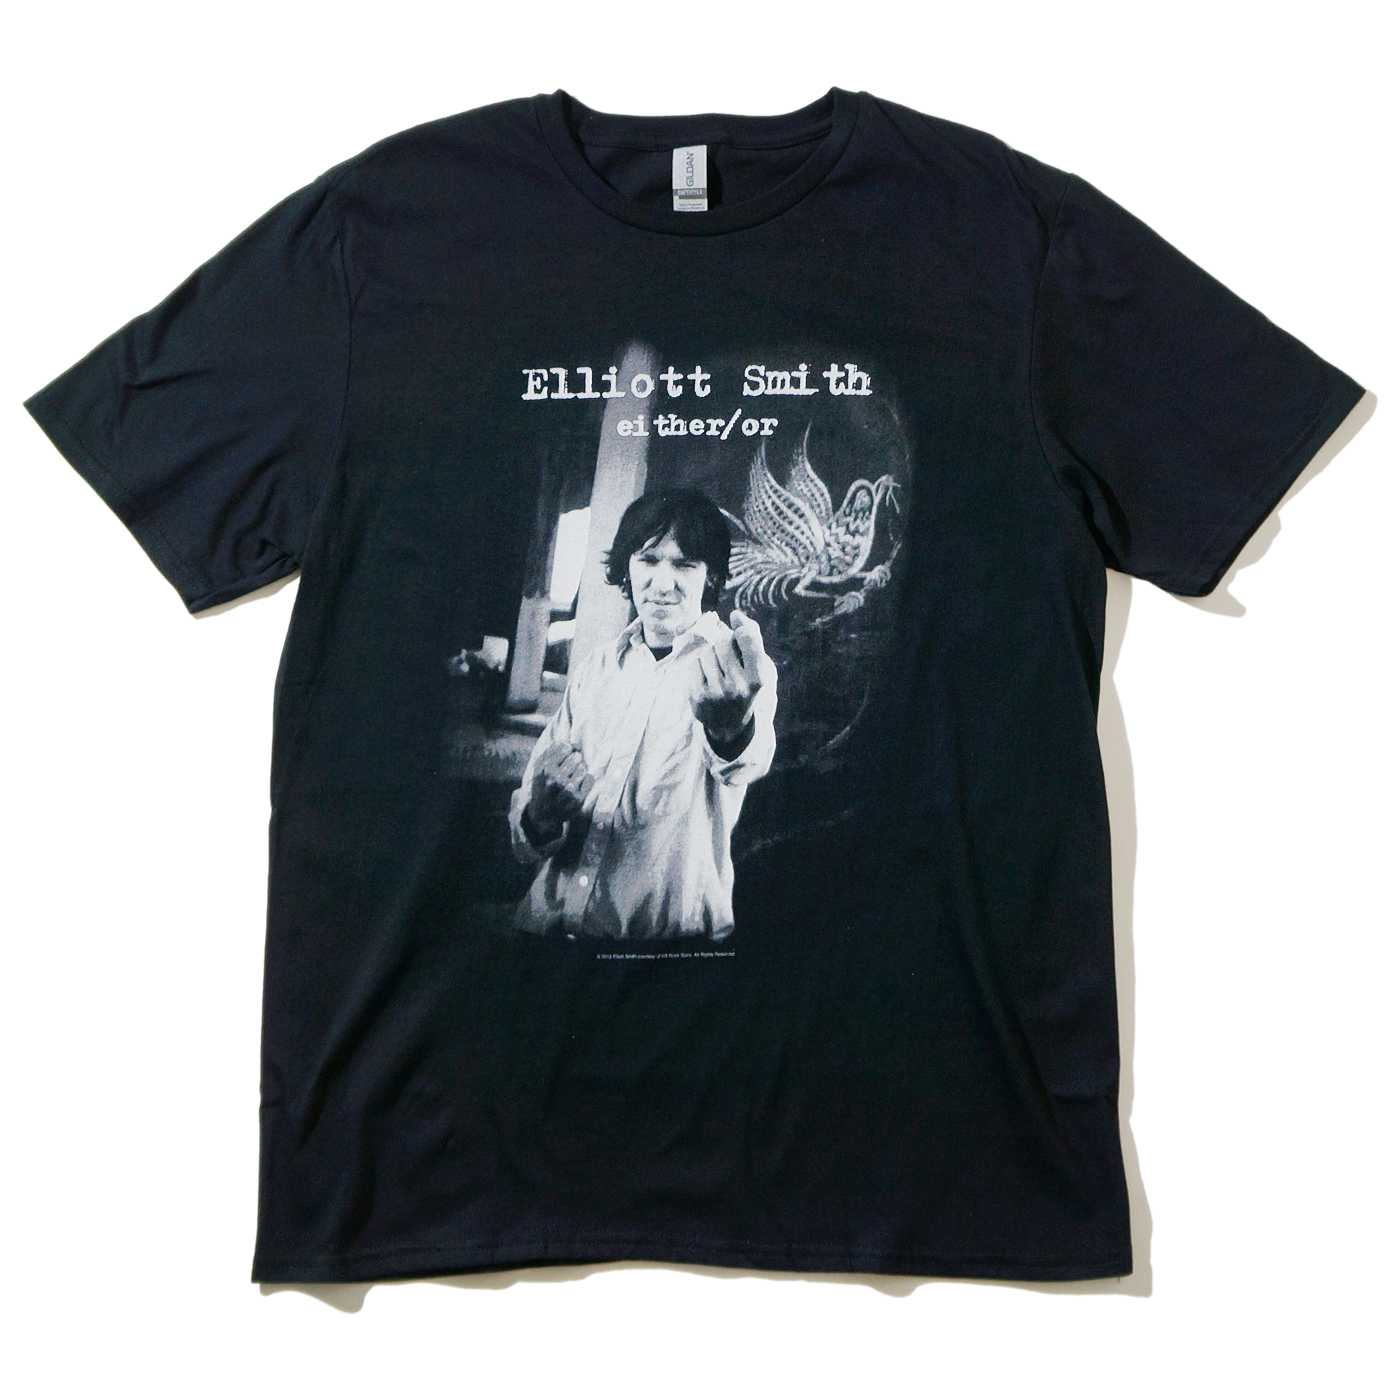 ELLIOTT SMITH Tシャツ Either/Or-Black